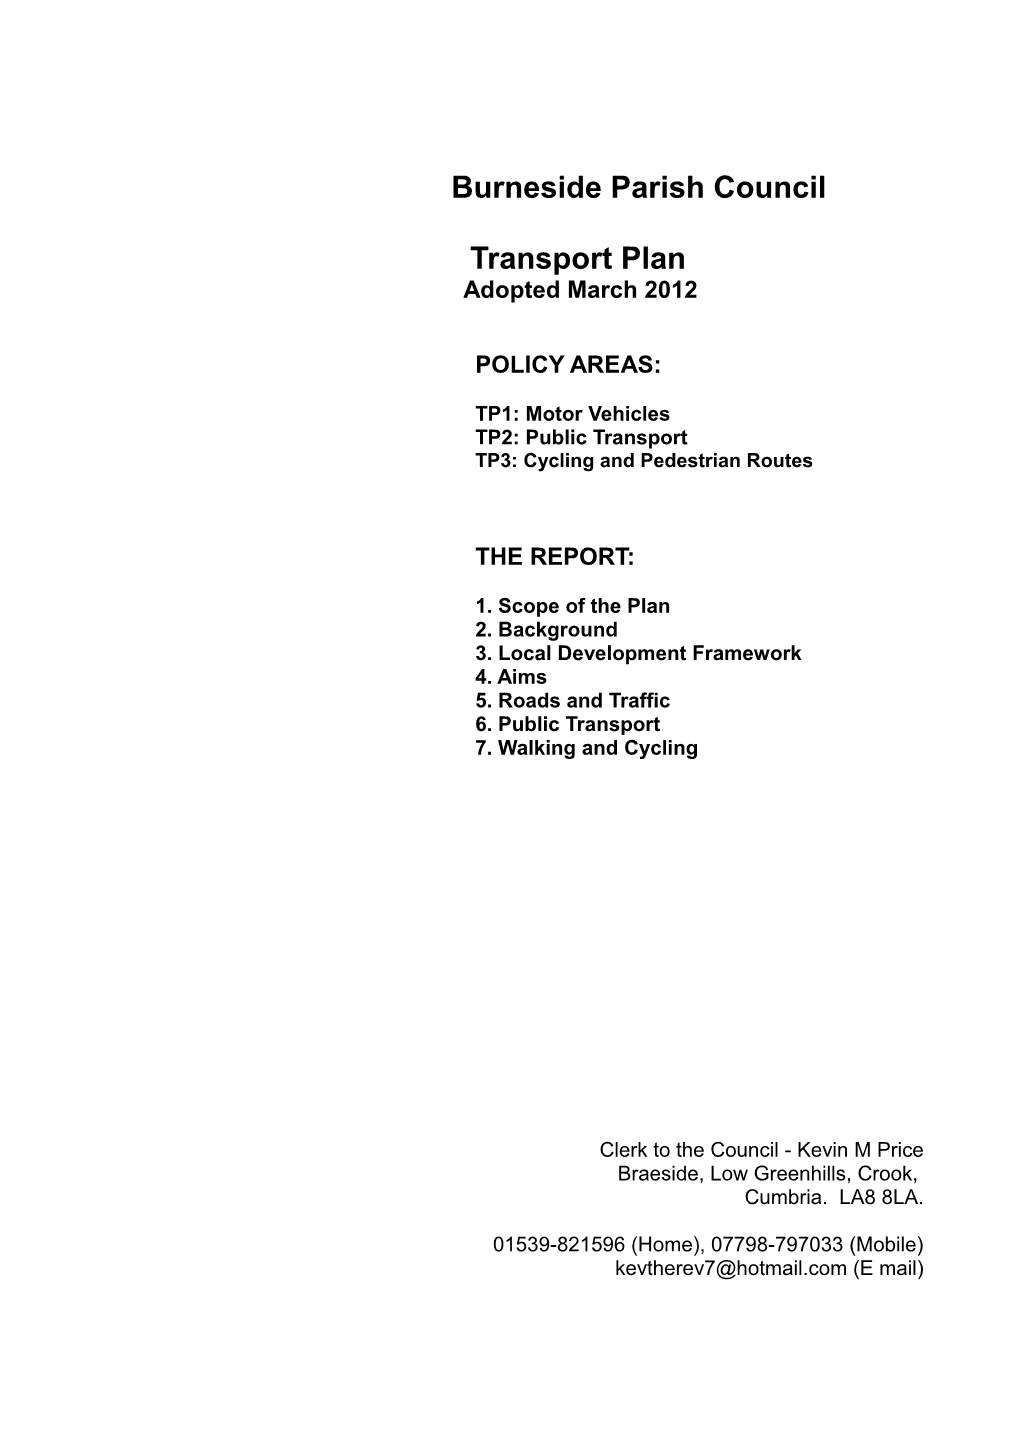 Burneside Parish Council Transport Plan